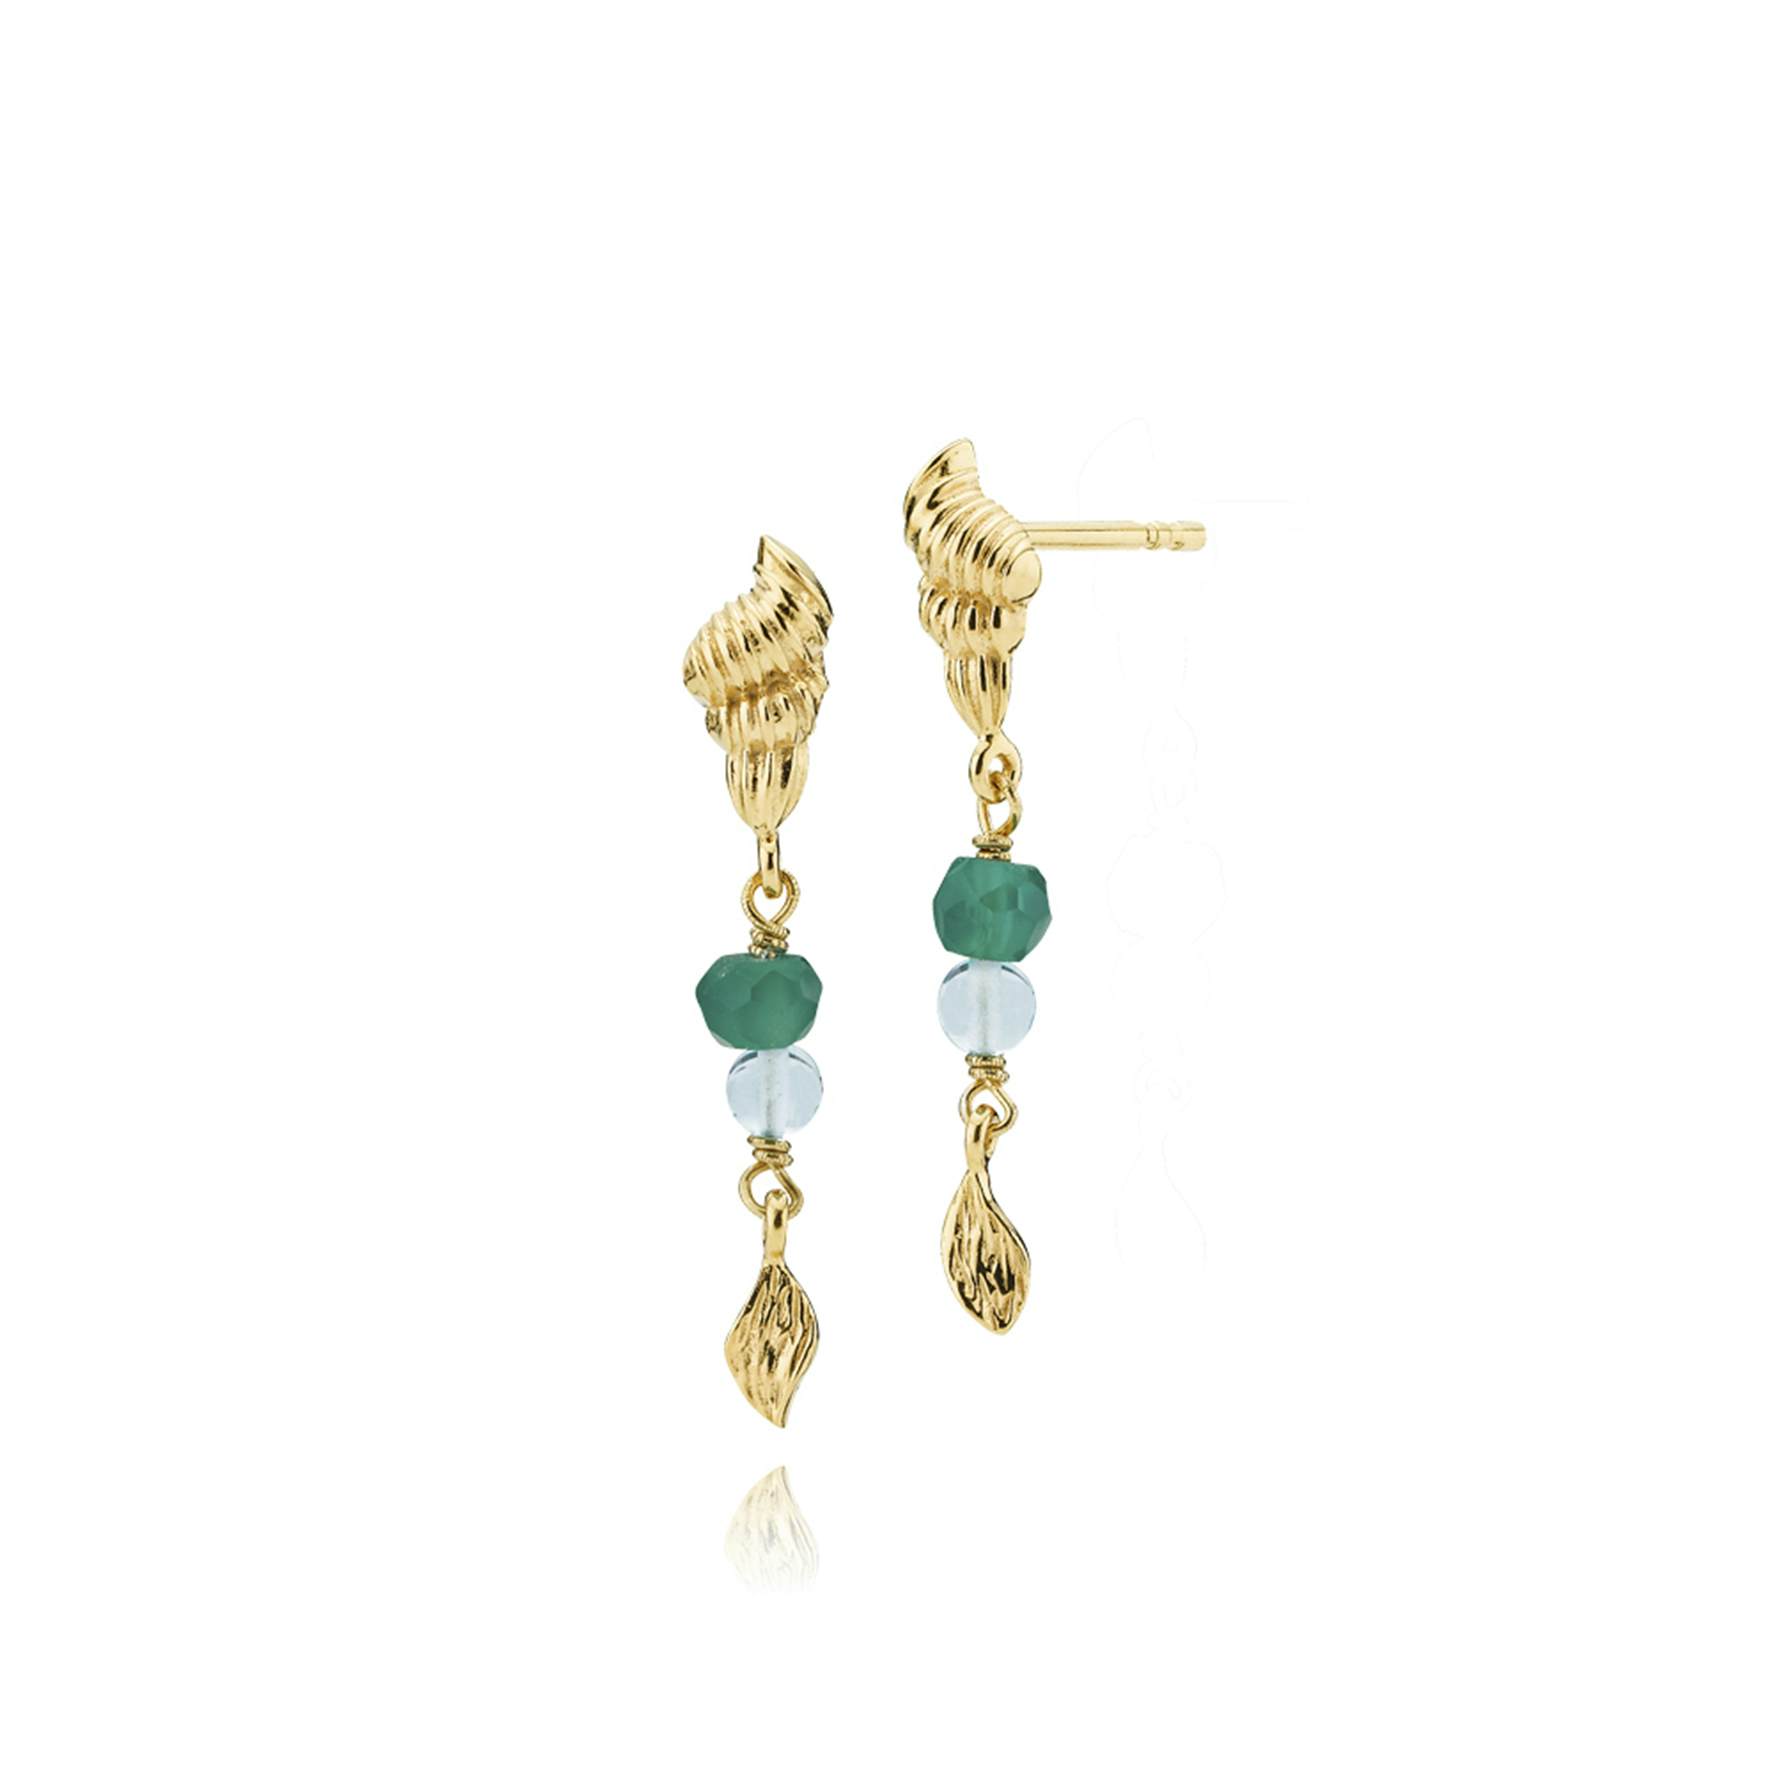 Kaia Earrings Green Onyx and Aqua Crystal fra Sistie i Forgyldt-Sølv Sterling 925|Blank